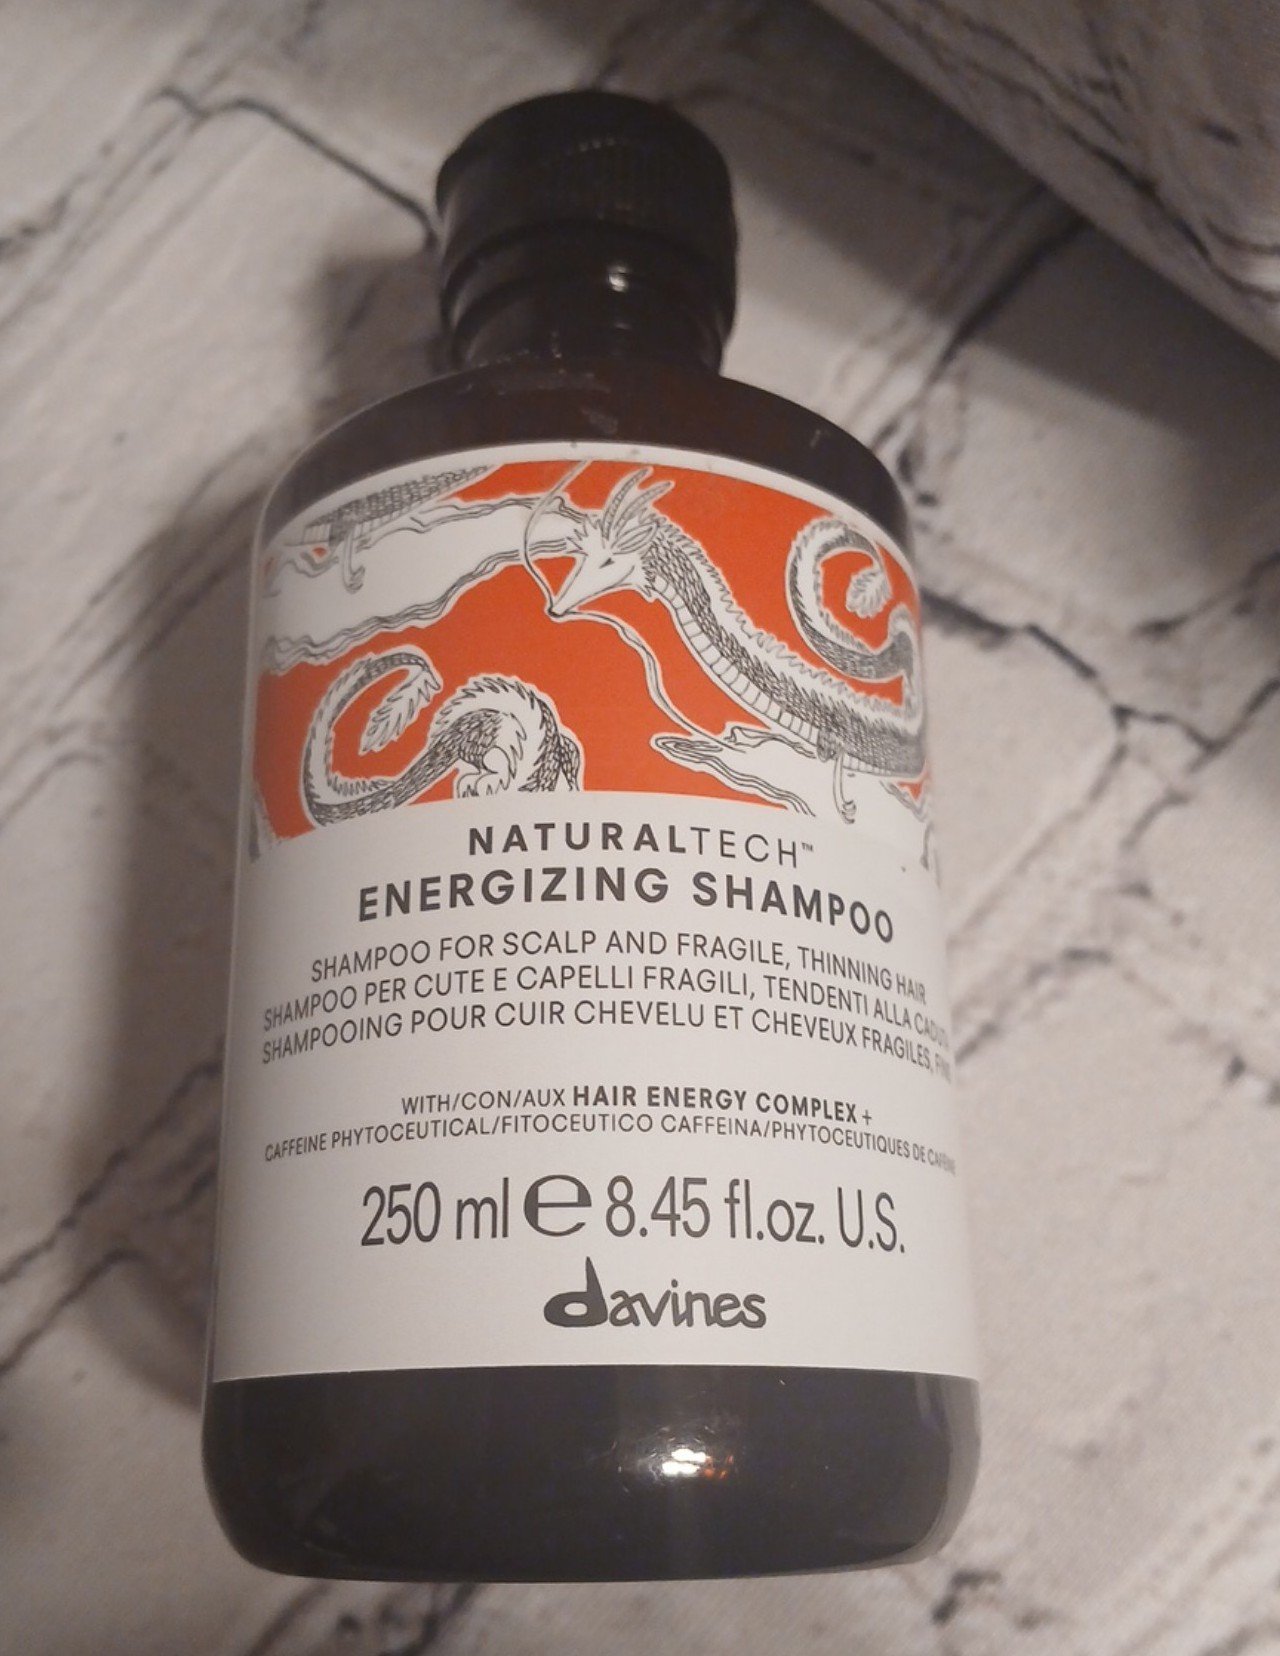 Davines Naturaltech ENERGIZING Shampoo Cleansing Fragile Thinning Hair 8.45 oz dYfltazEt